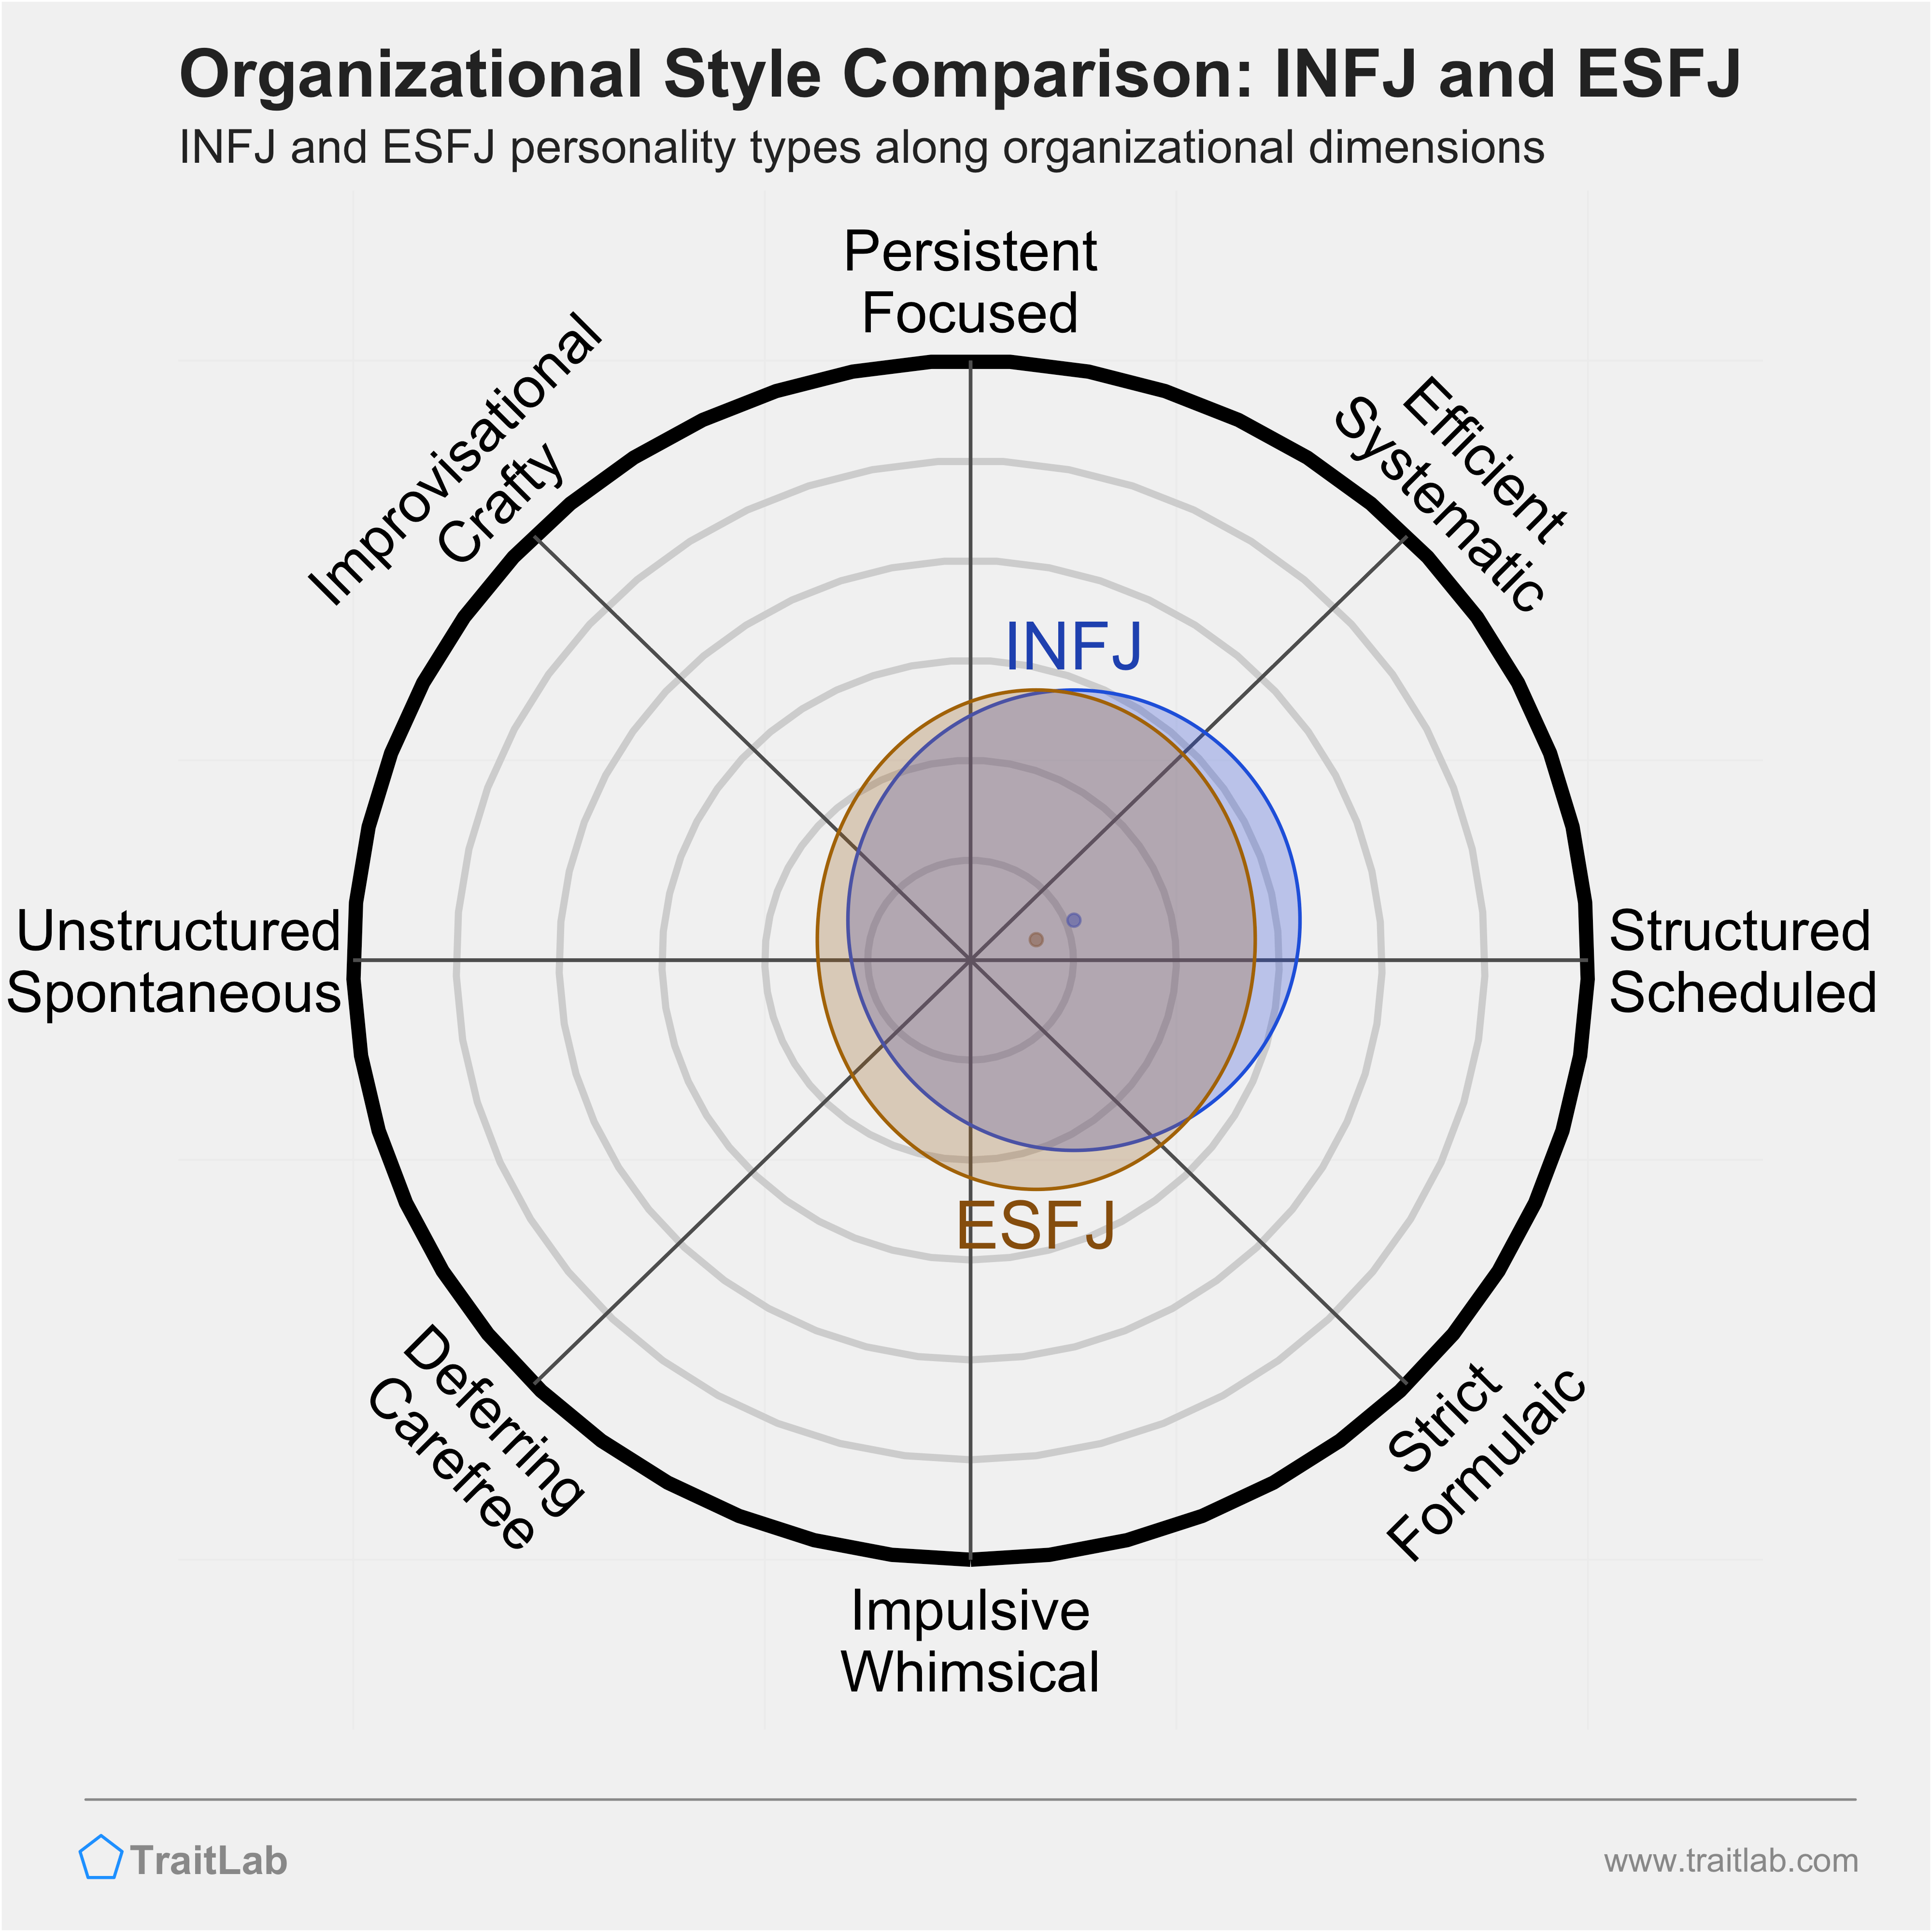 INFJ and ESFJ comparison across organizational dimensions